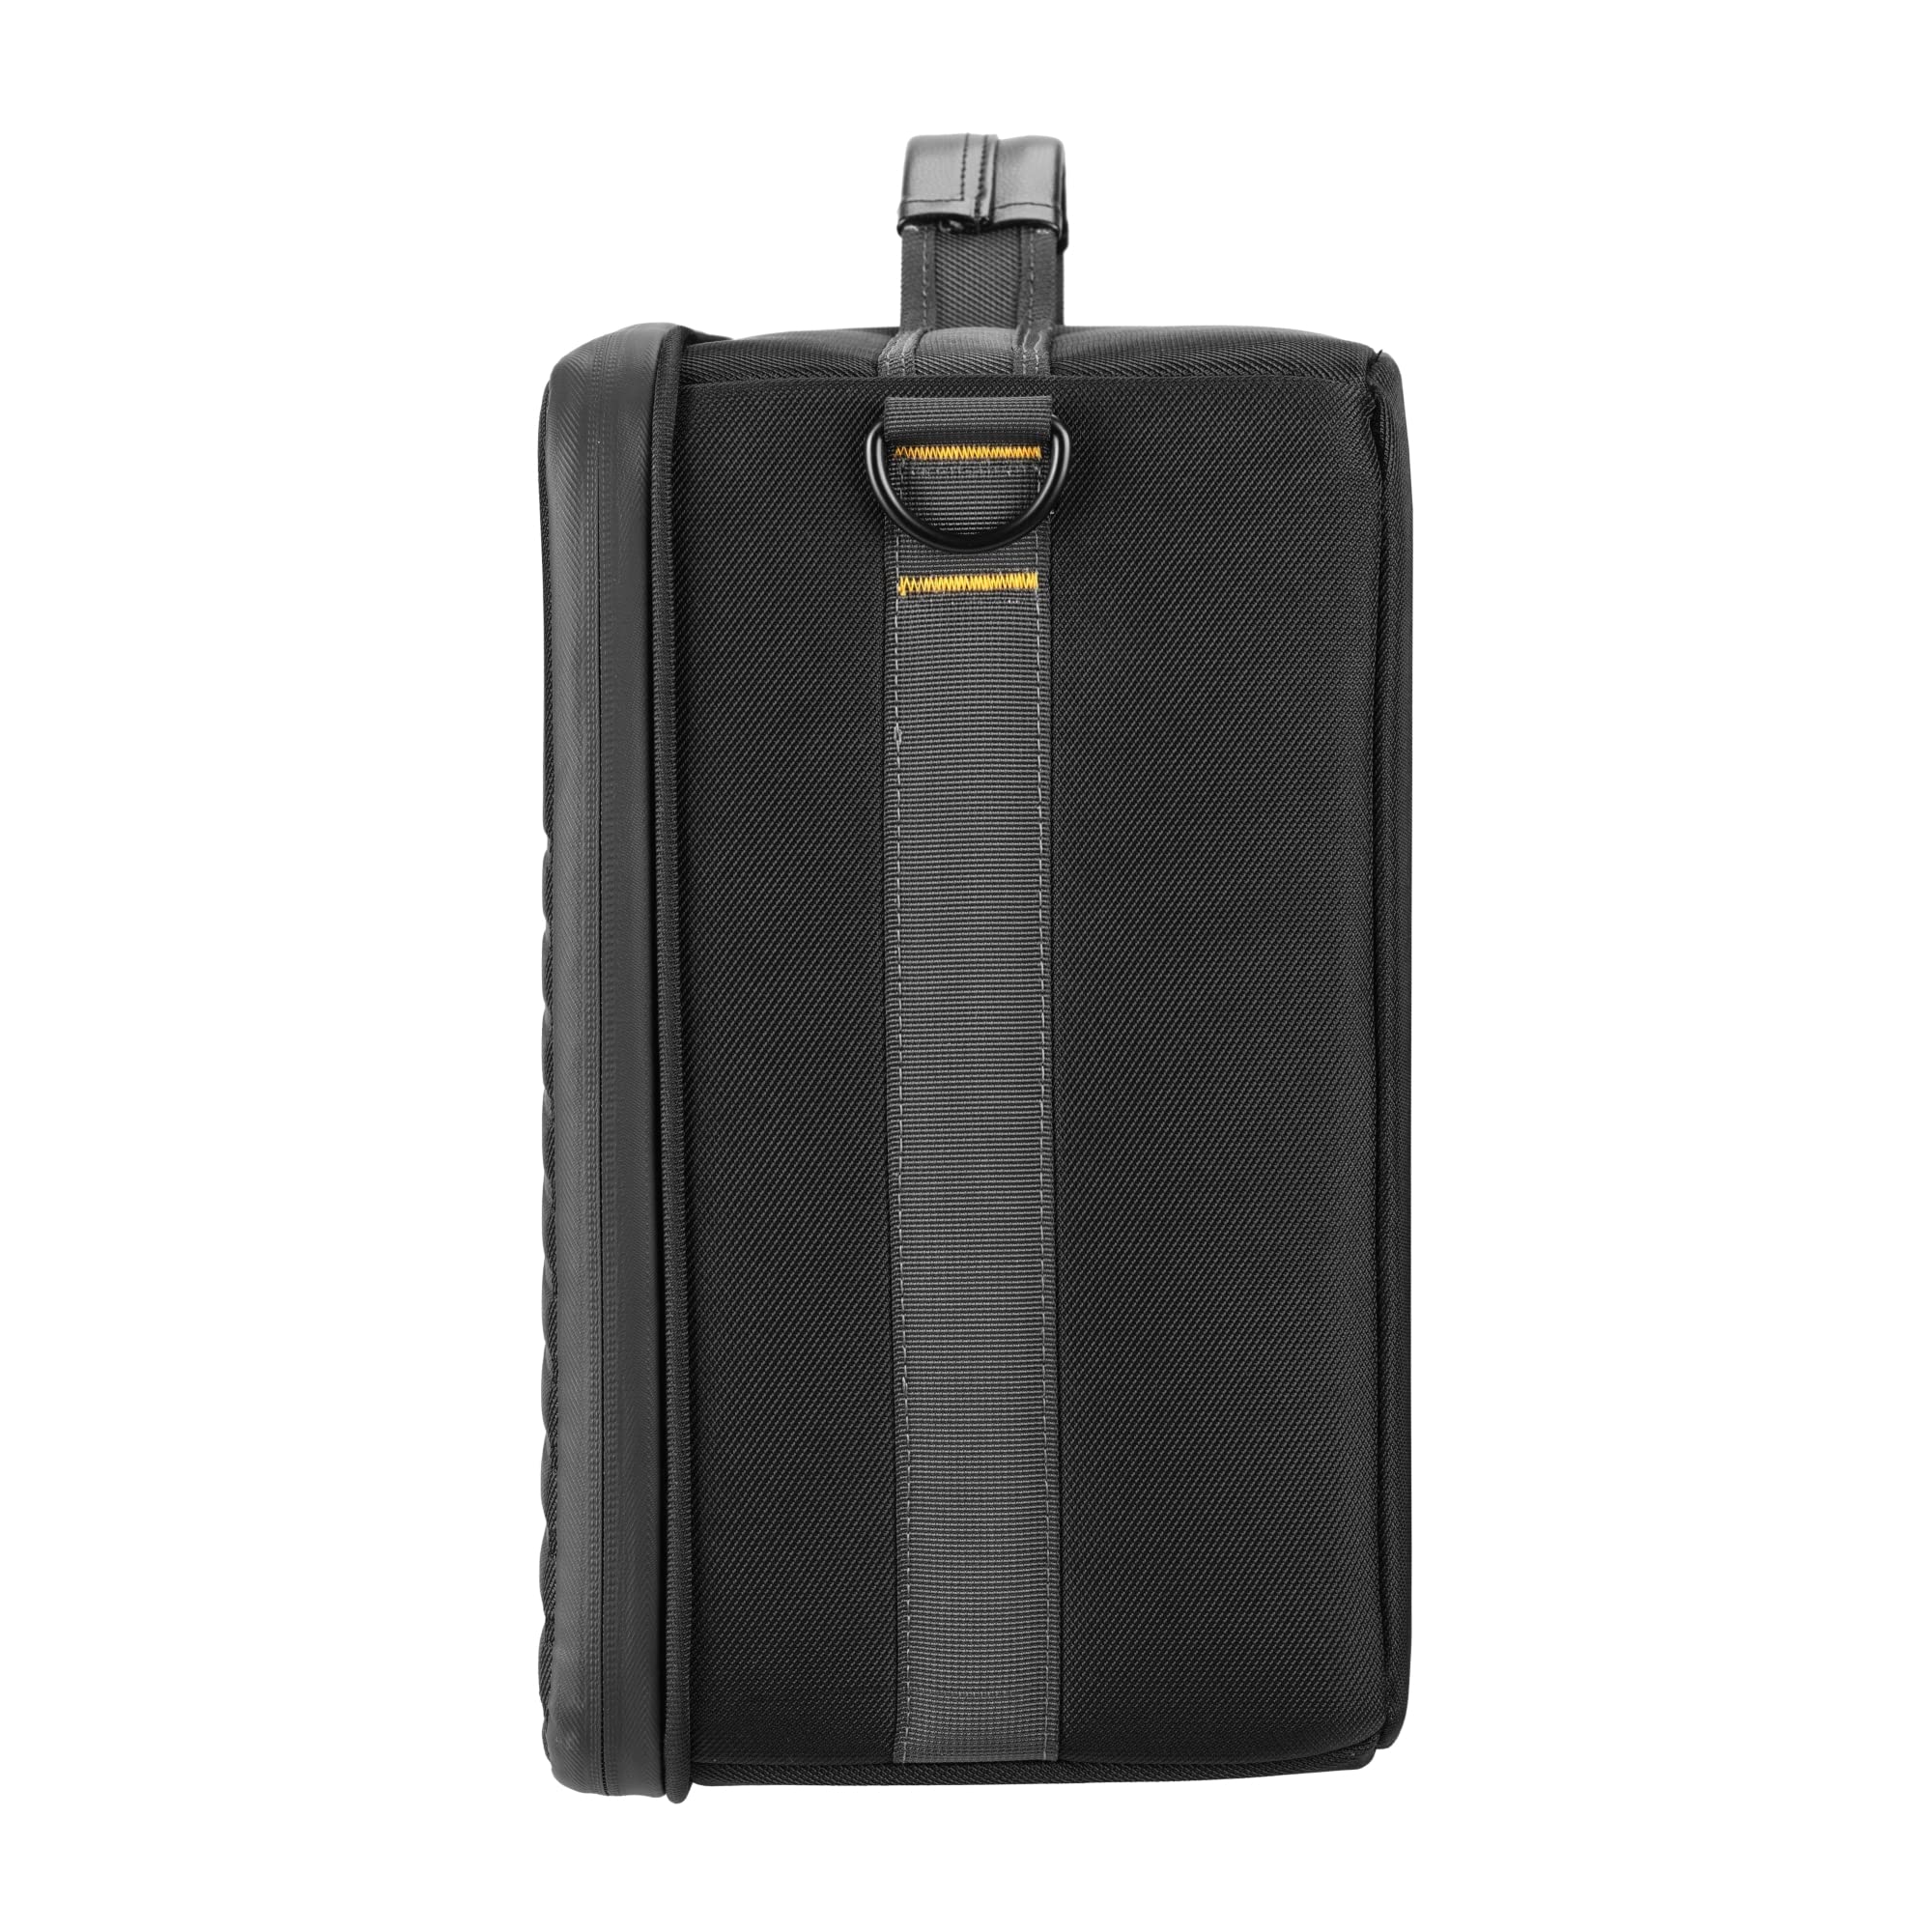 VANGUARD VEO BIB Divider S46 Customizeable Insert/Protection Bag for SLR DSLR Camera, Lenses, Accessories